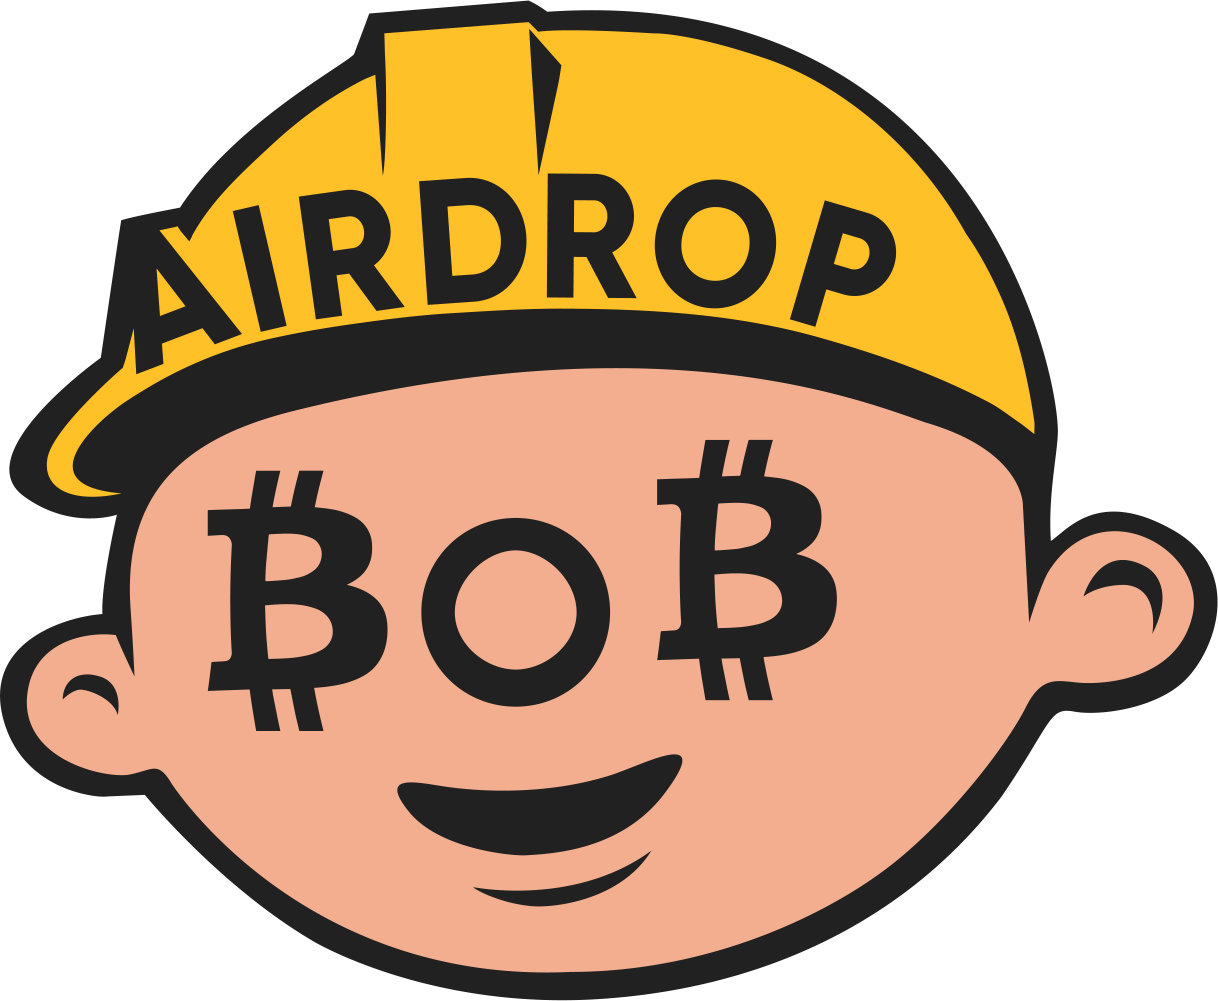 New Airdrop partner announcement